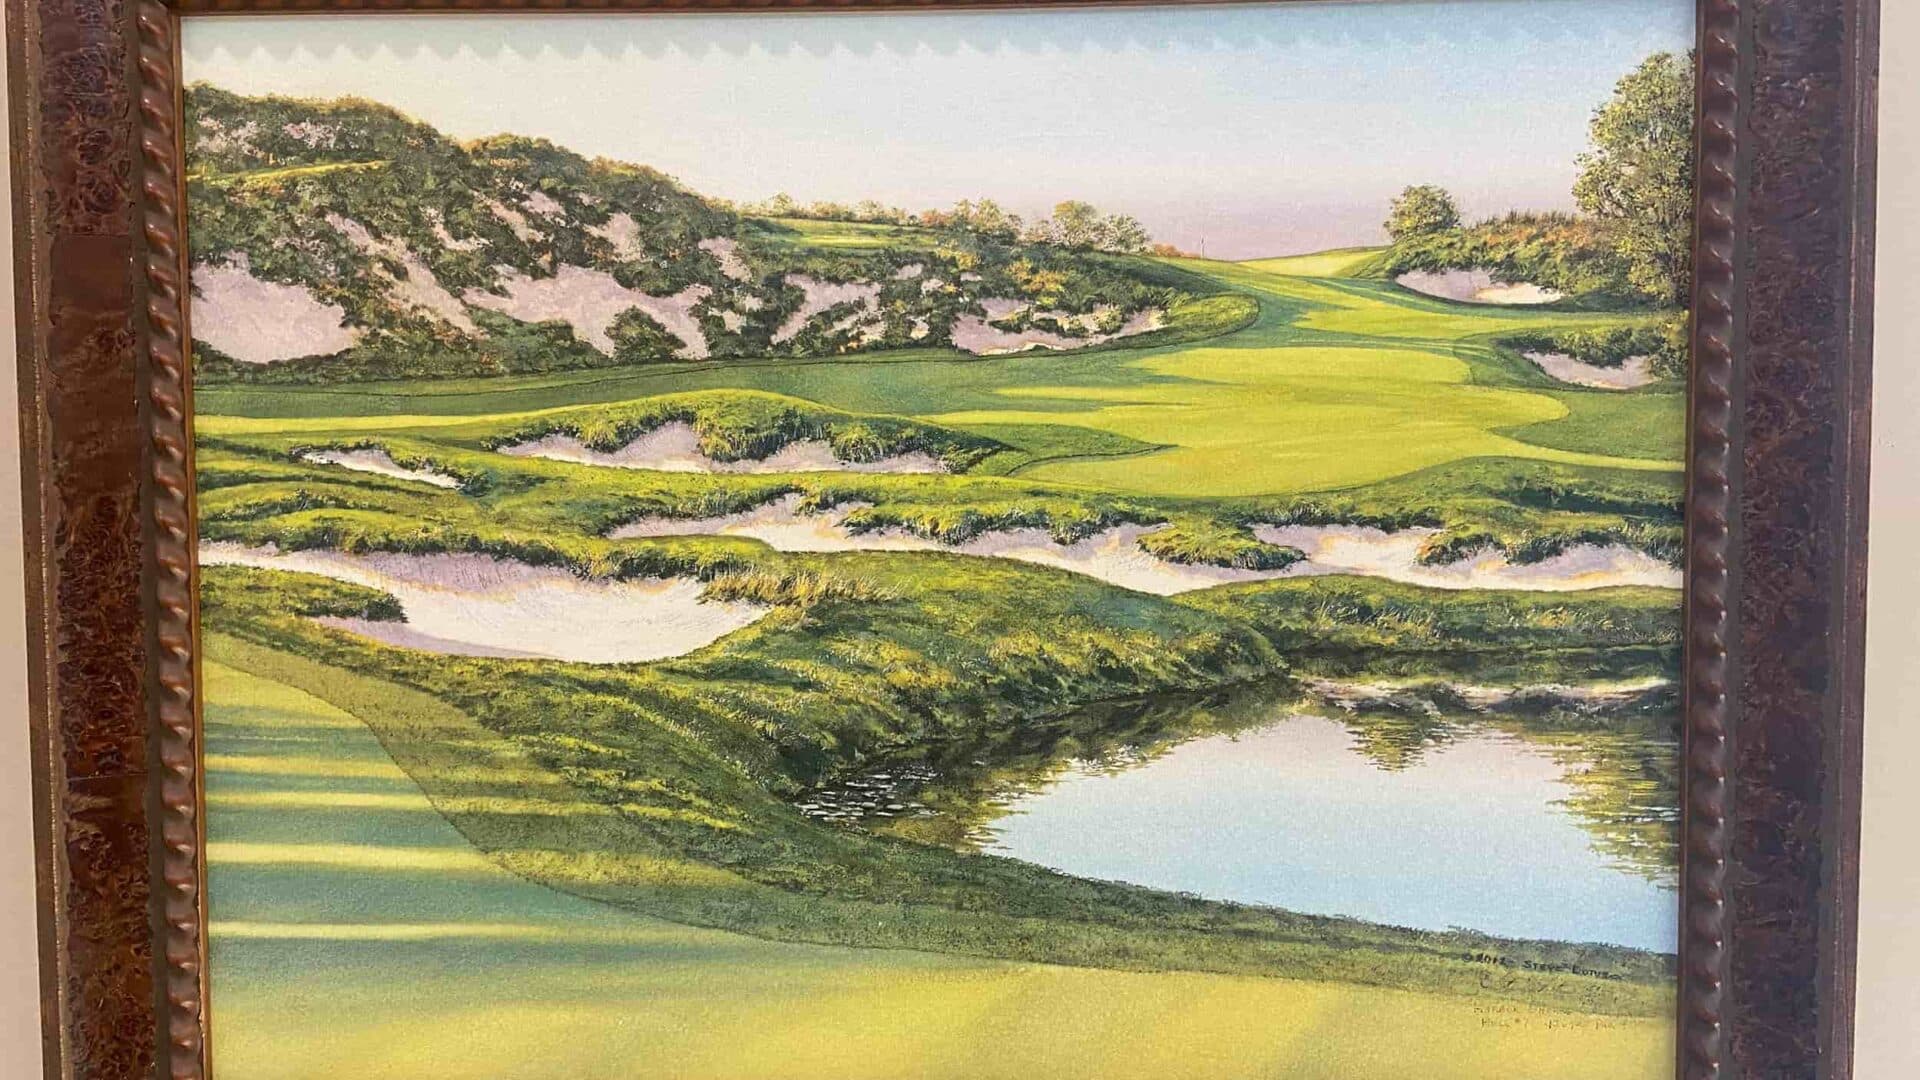 Art of golf course in Michigan